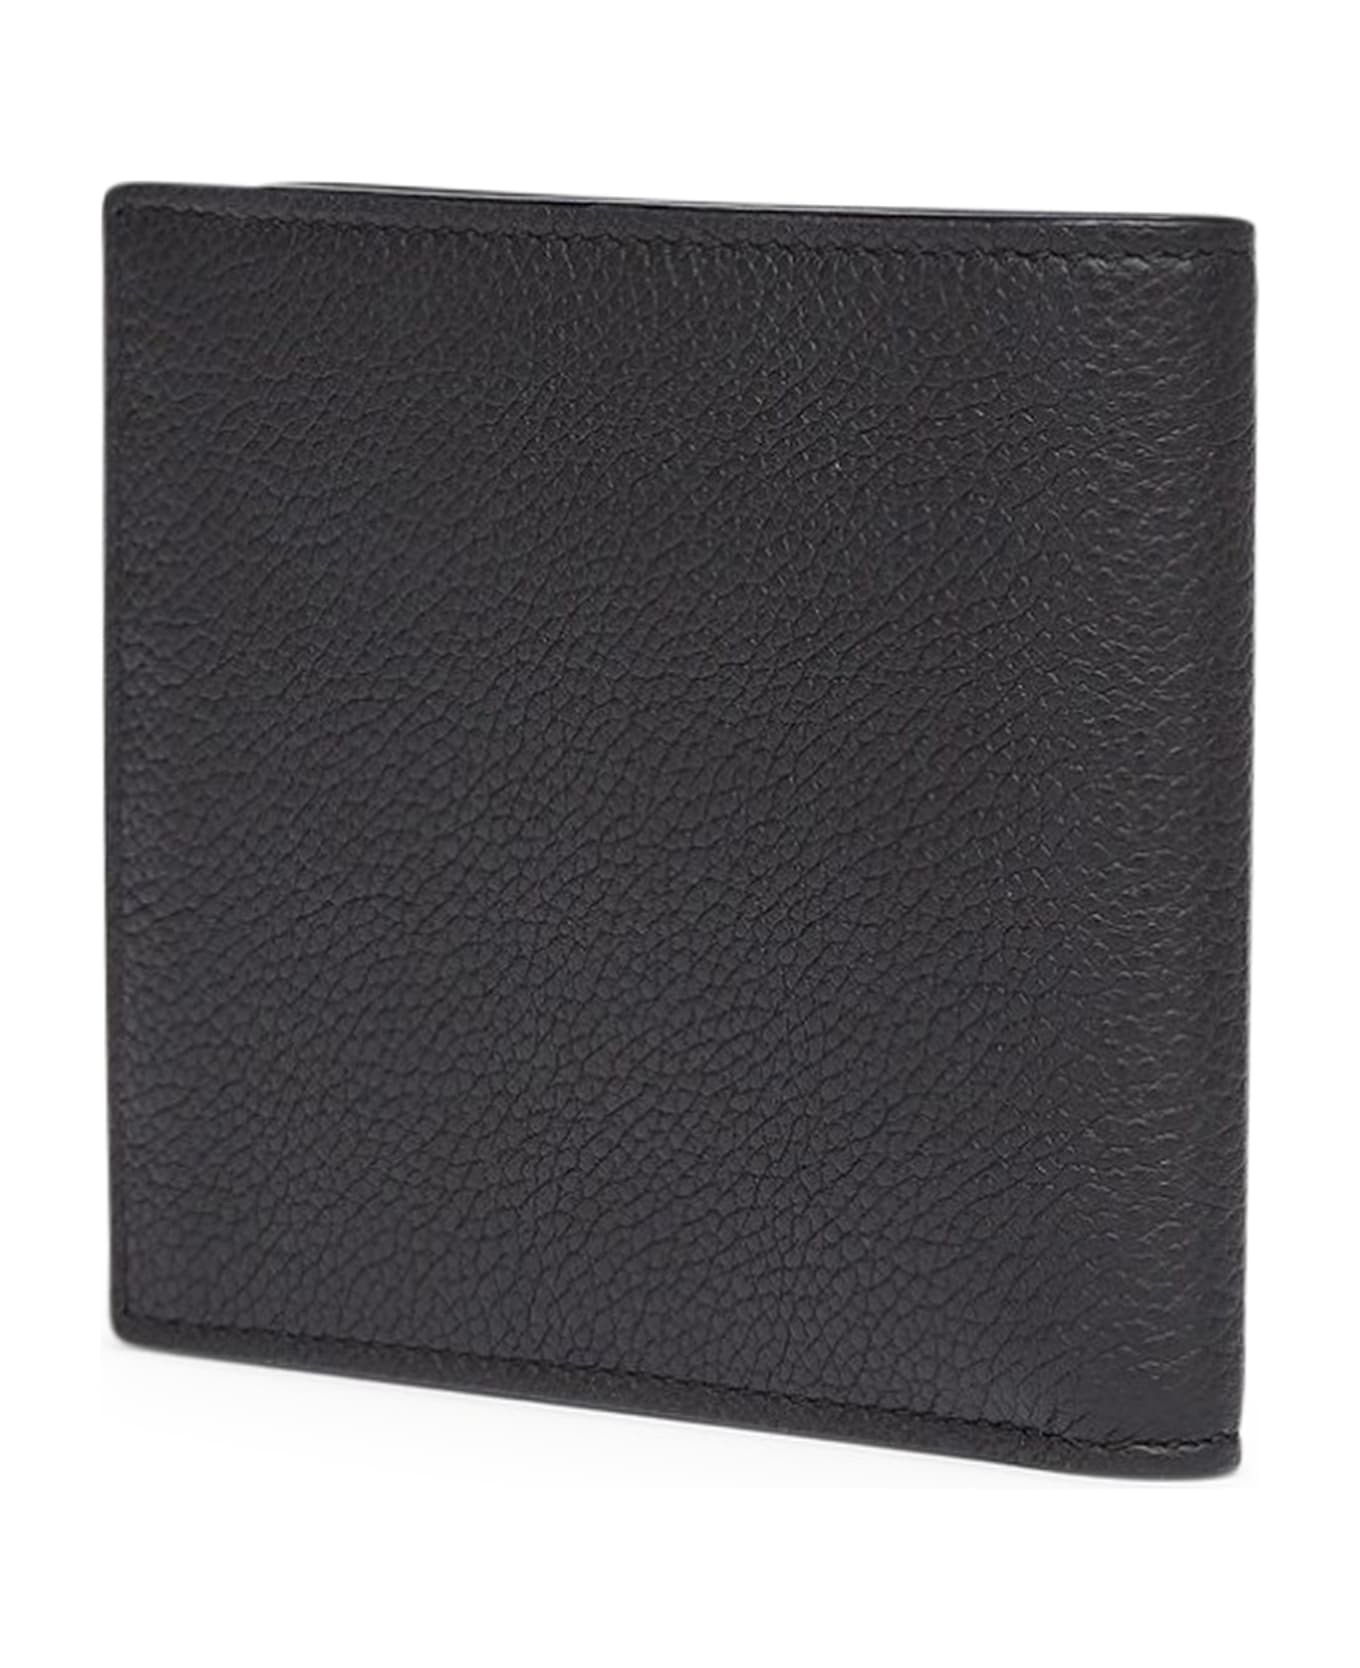 Fendi Bi-fold Wallet Vit.cher C/let - Black Rubs